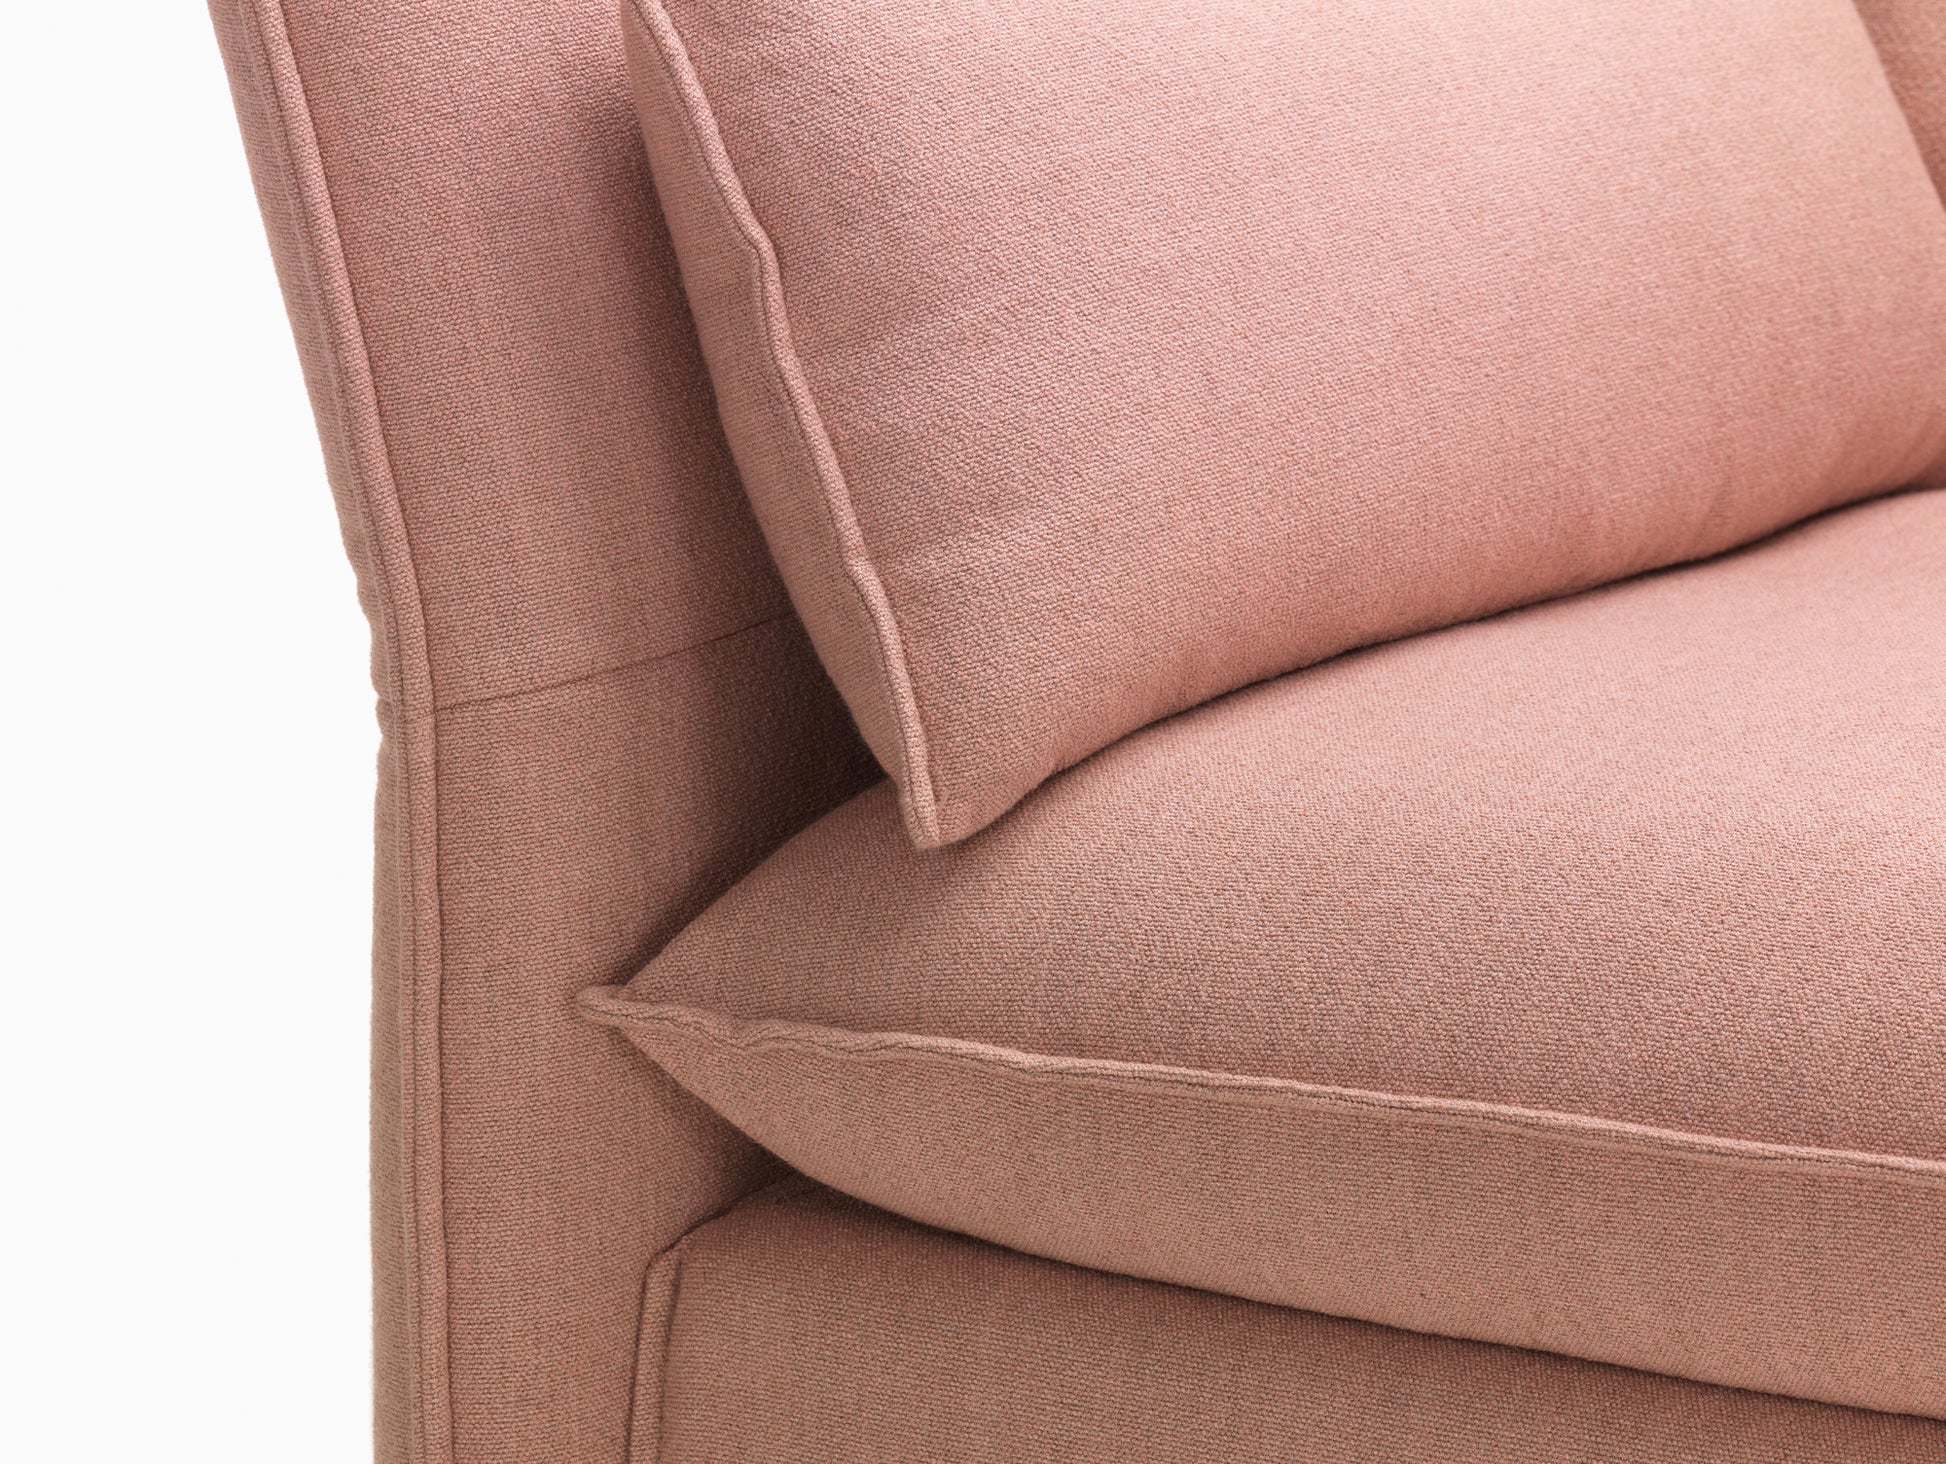 Mariposa 3-Seater Sofa by Vitra - Dumet 10 Pale Rose Beige (F80)